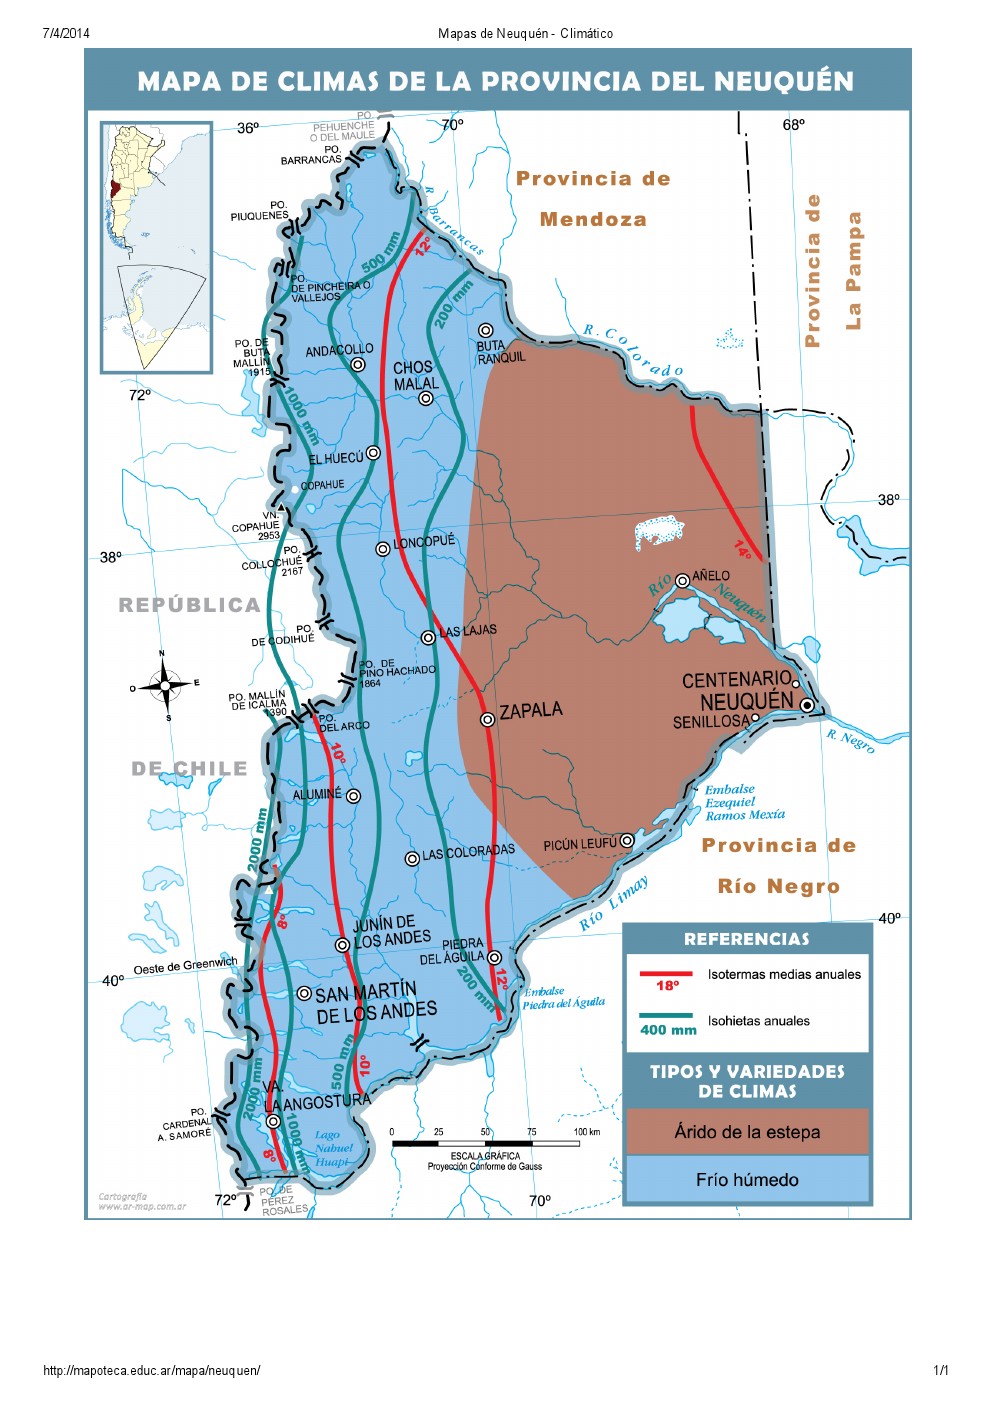 Mapa climático de Neuquén. Mapoteca de Educ.ar